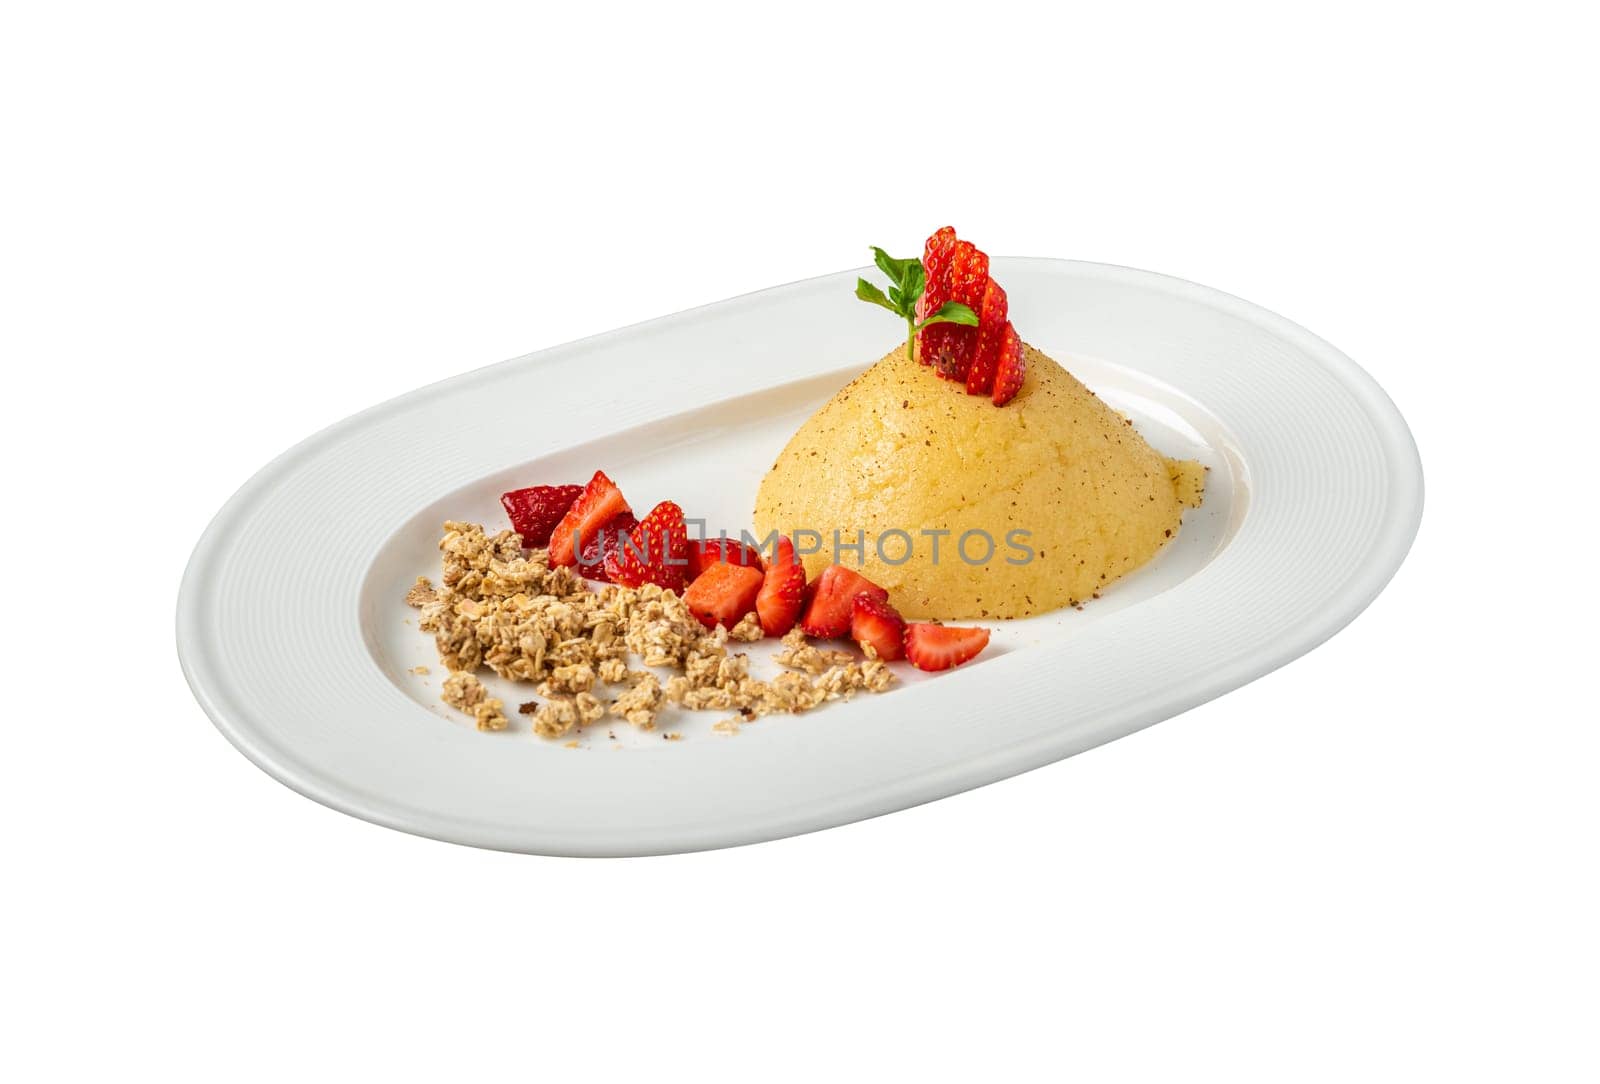 Turkish Dessert semolina halva.  Semolina dessert with cinnamon powder and strawberry by Sonat